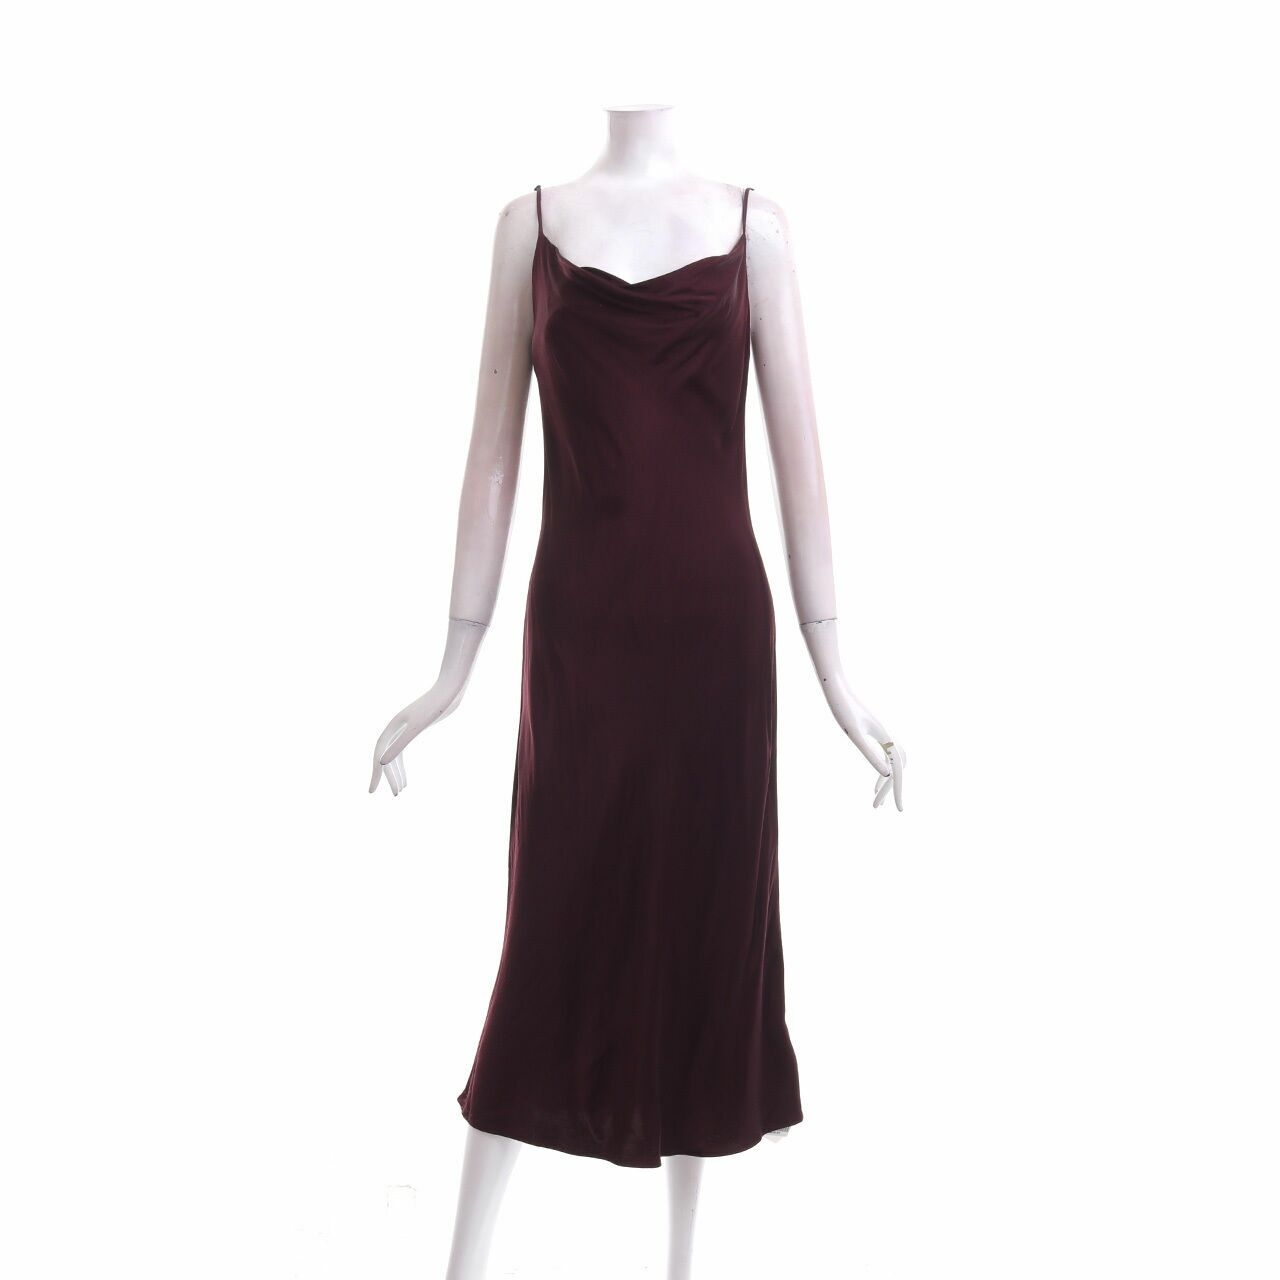 Zara Burgundy Midi Dress